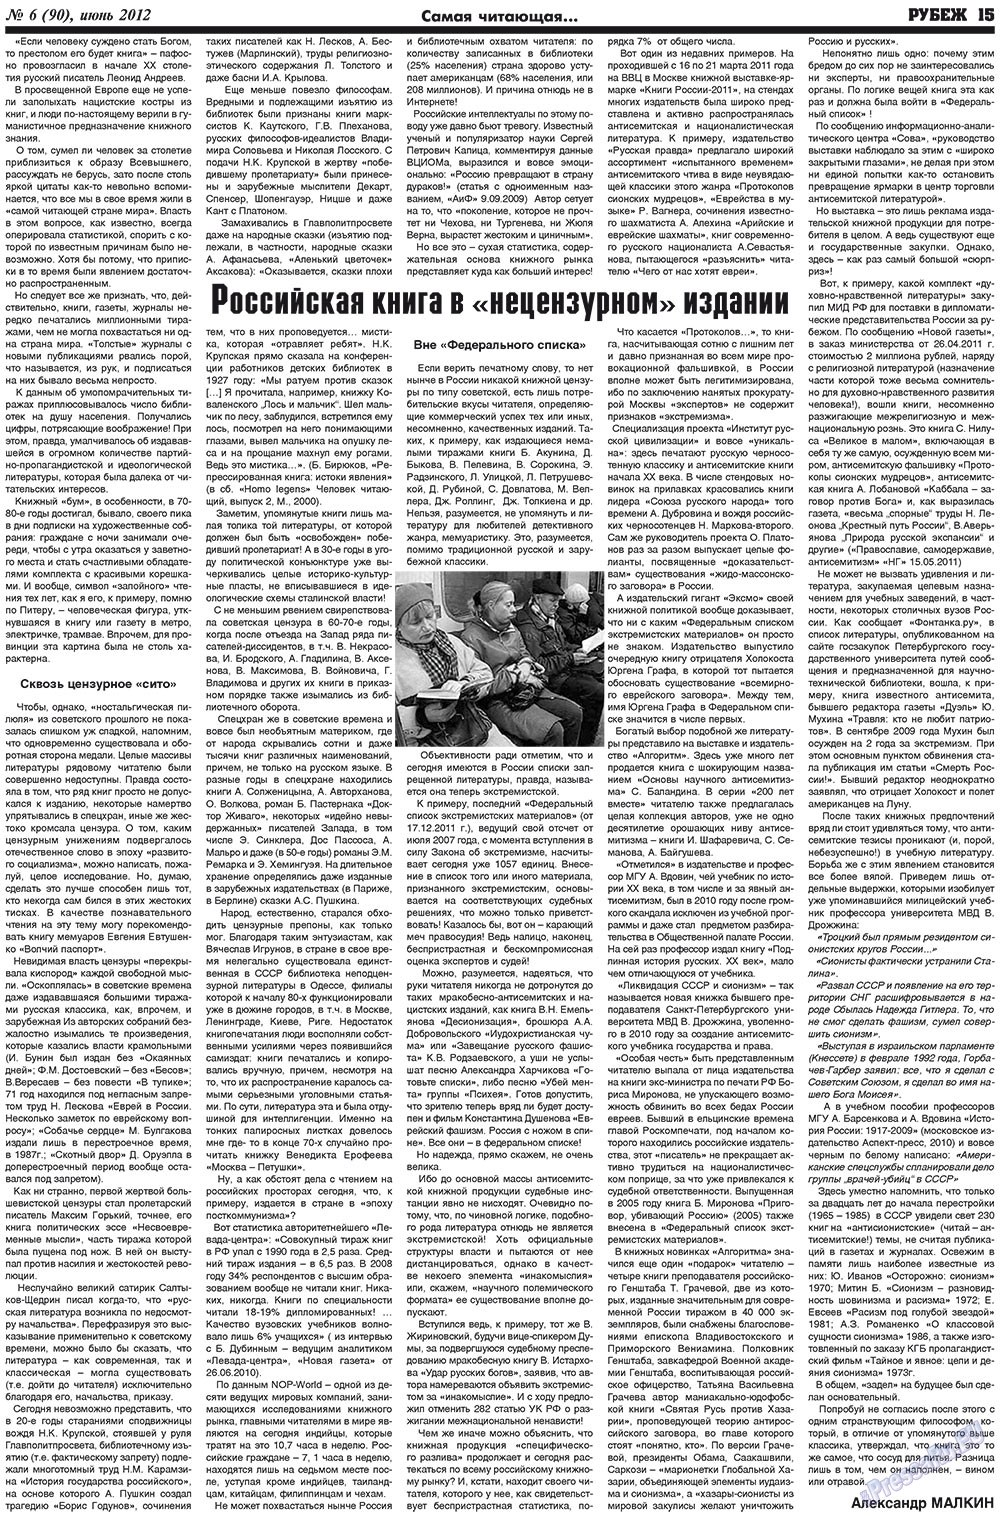 Рубеж, газета. 2012 №6 стр.15